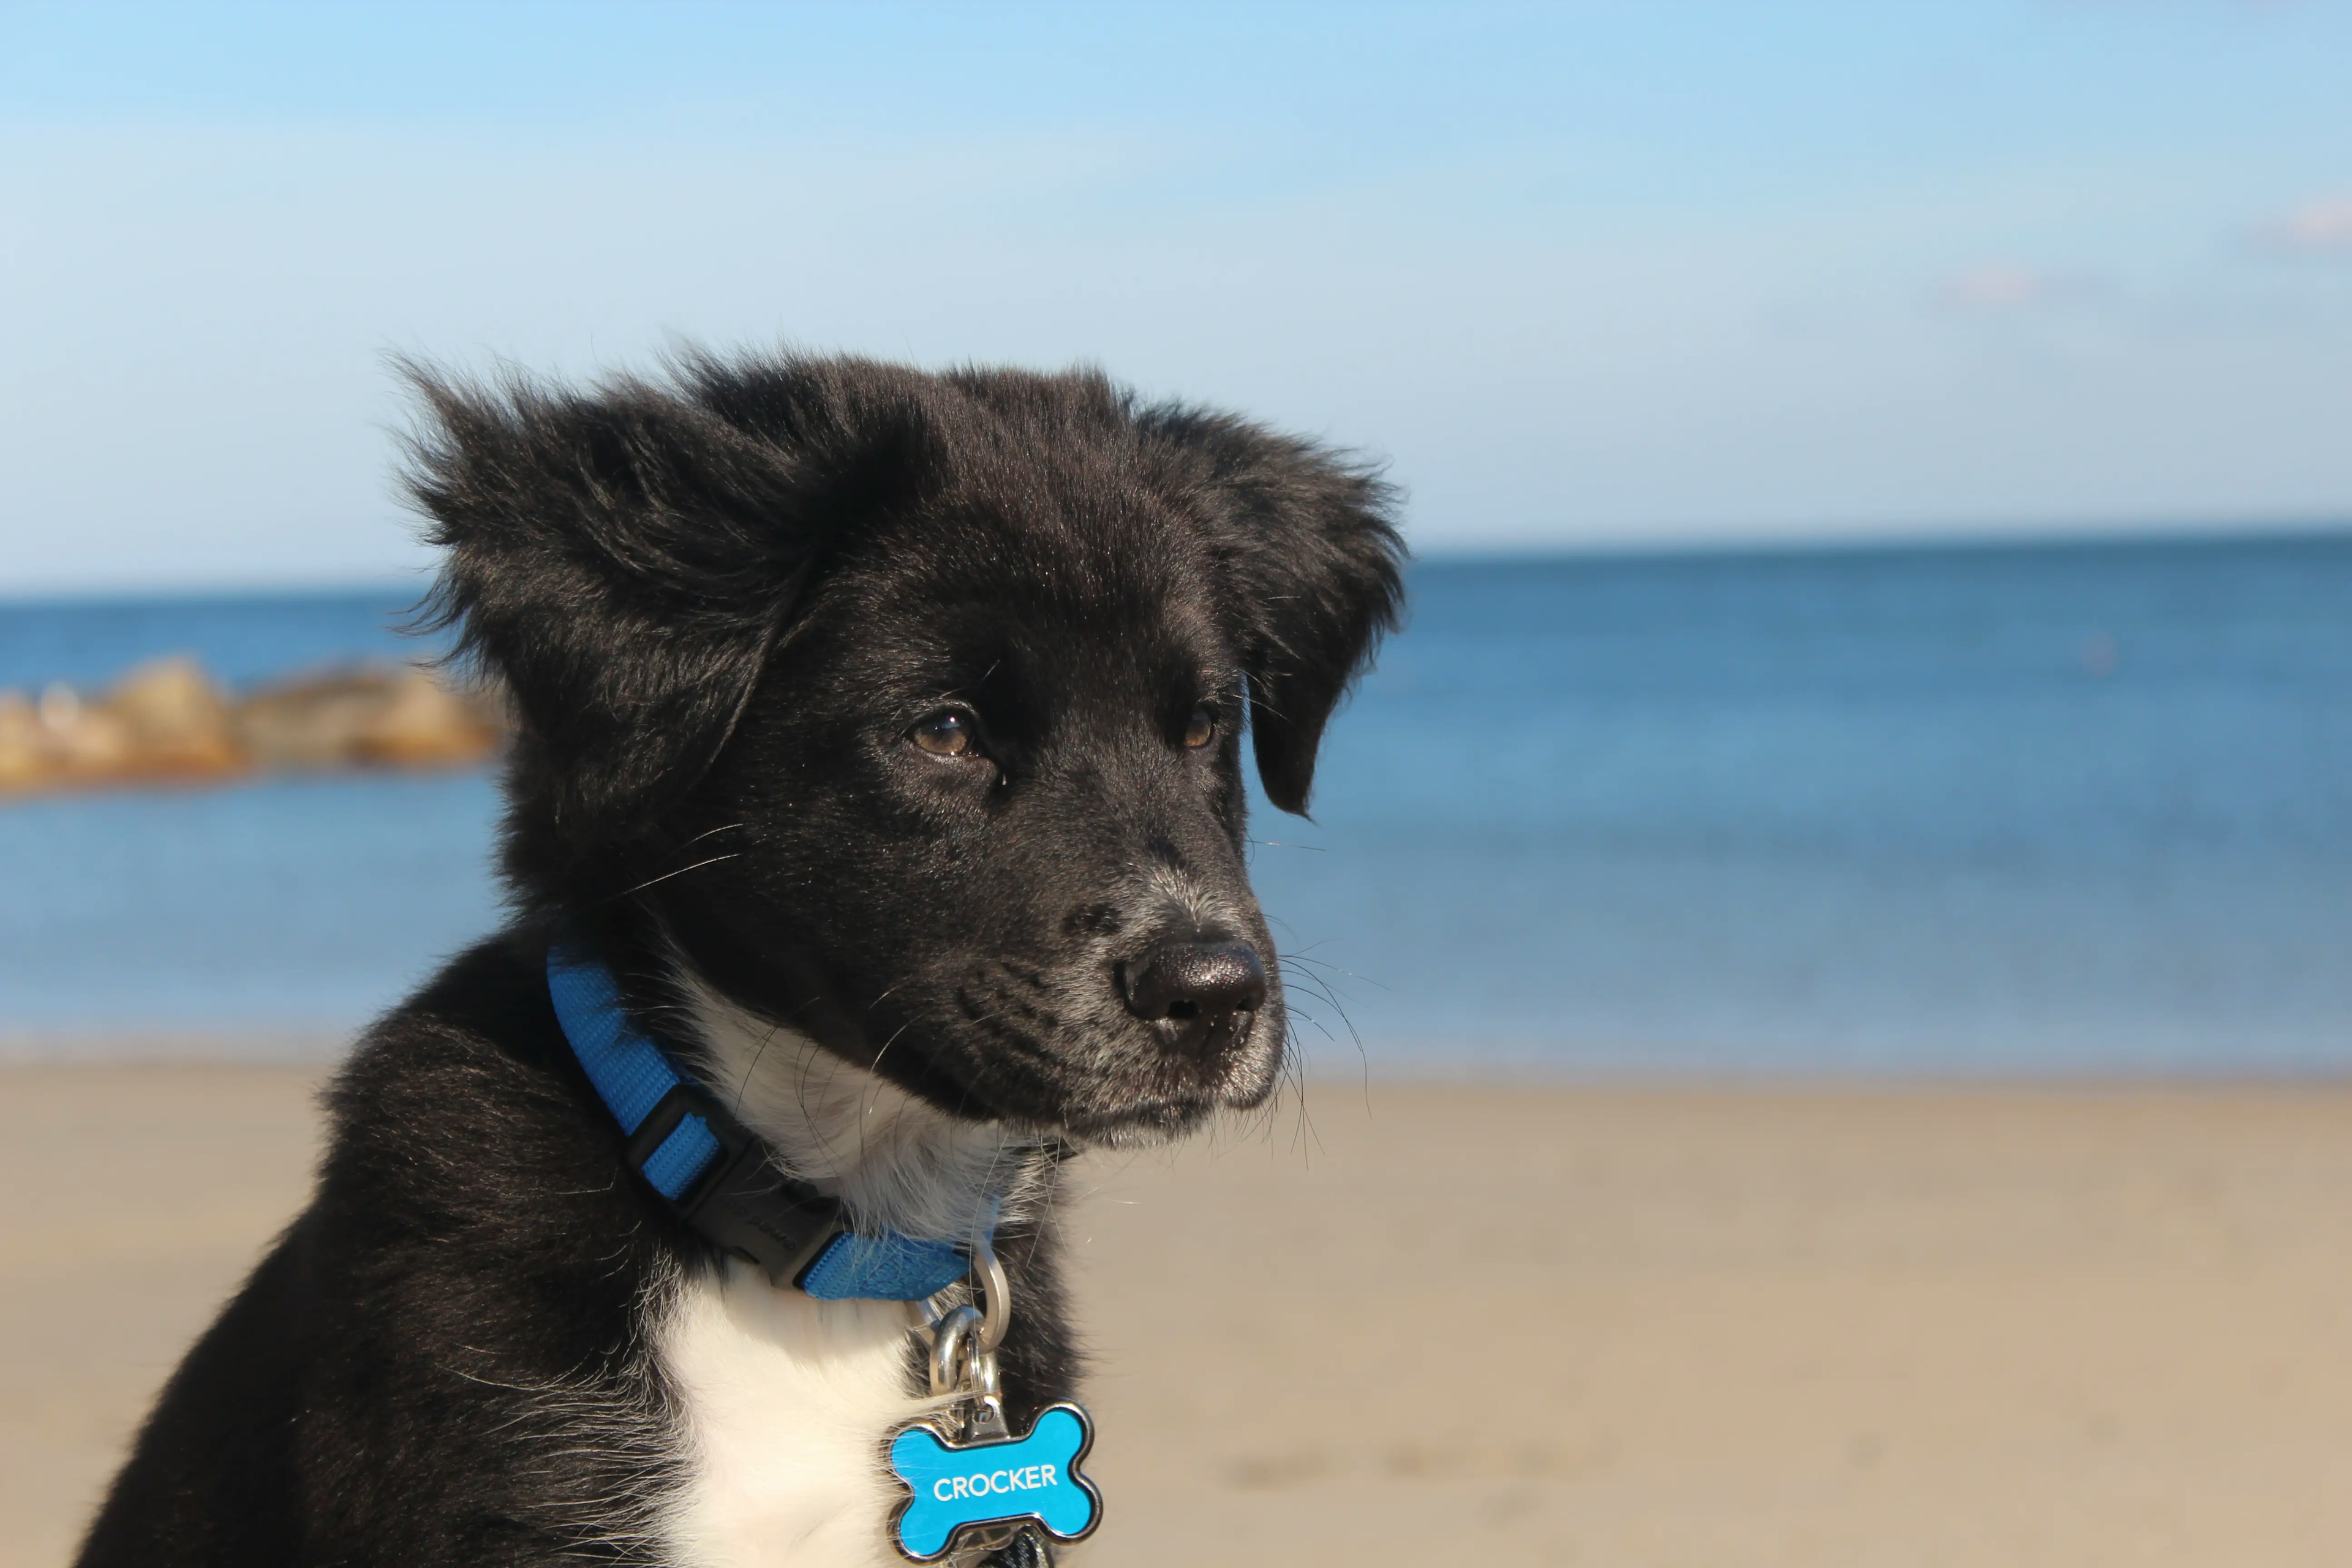 Black dog with white blaze named crocker on beach